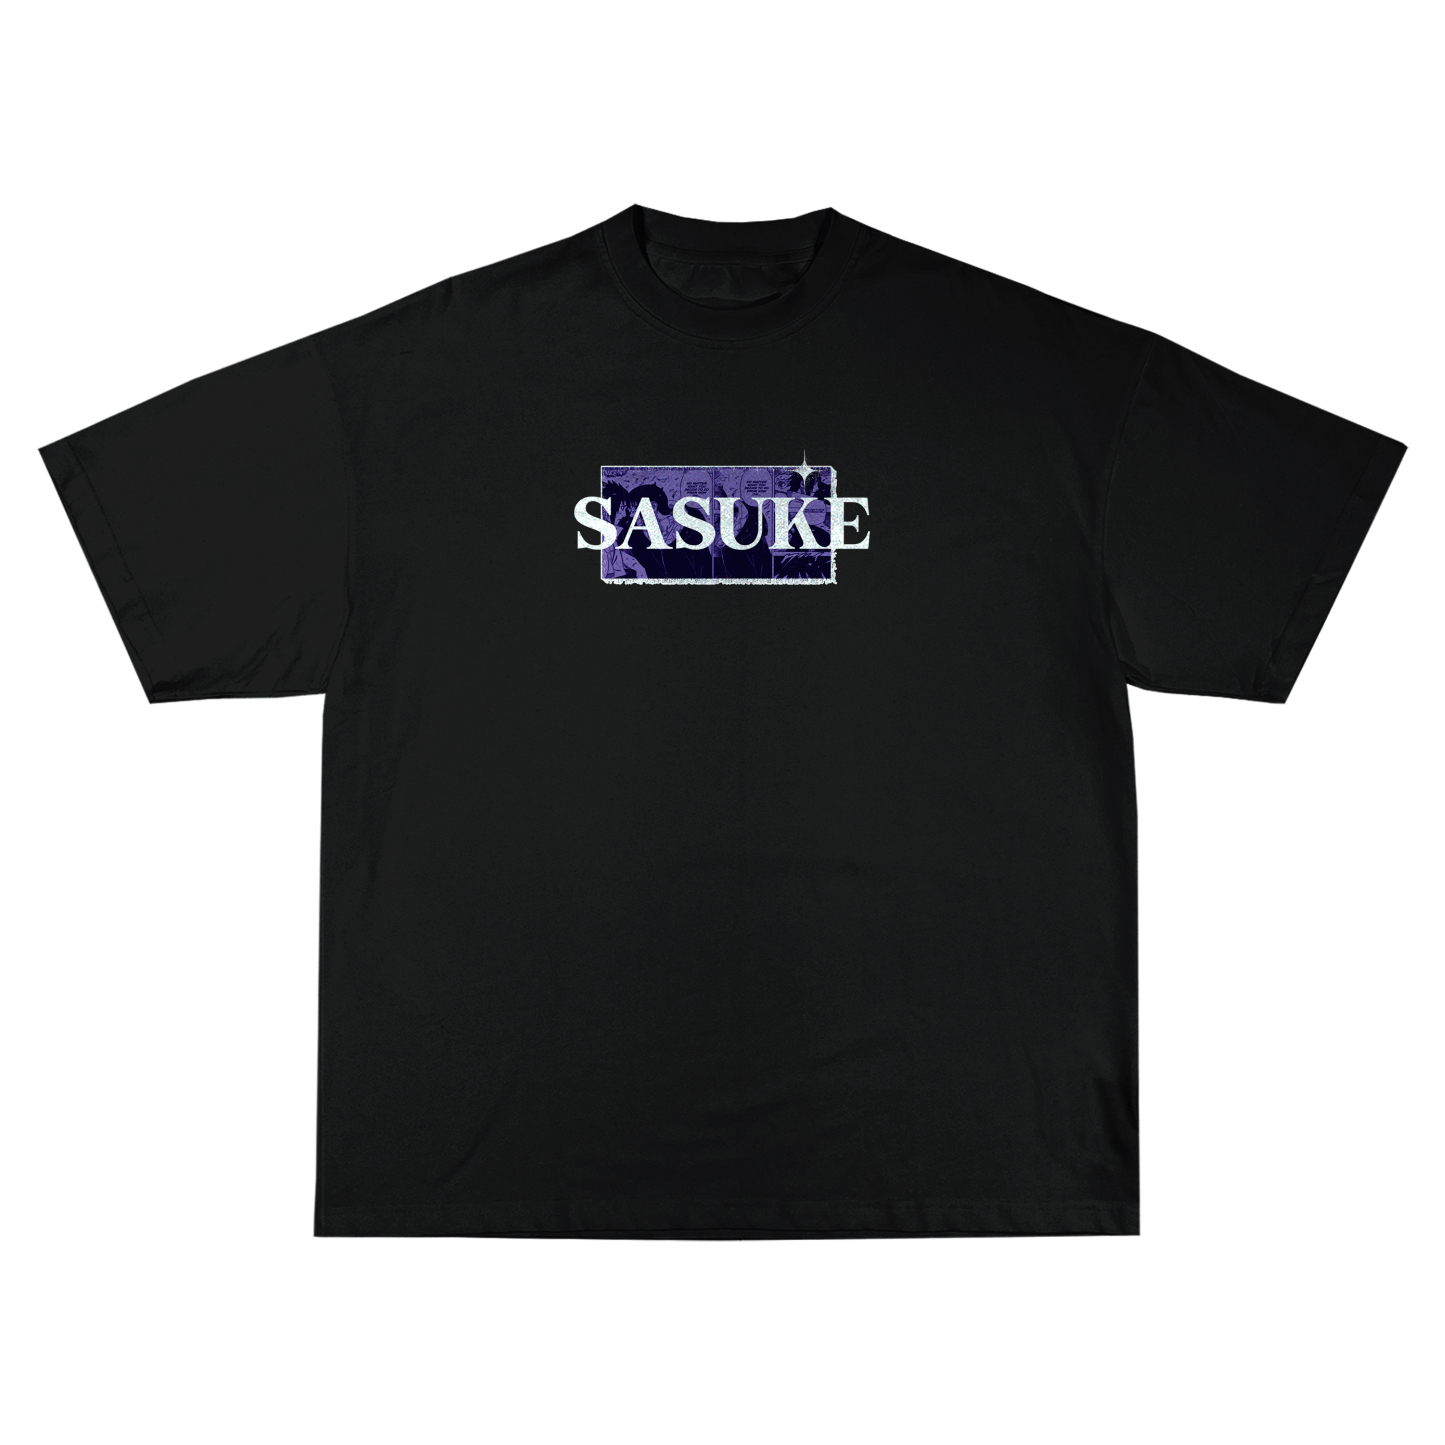 Uchiha Sasuke "Revenge" T-Shirt | Naruto Shippuden